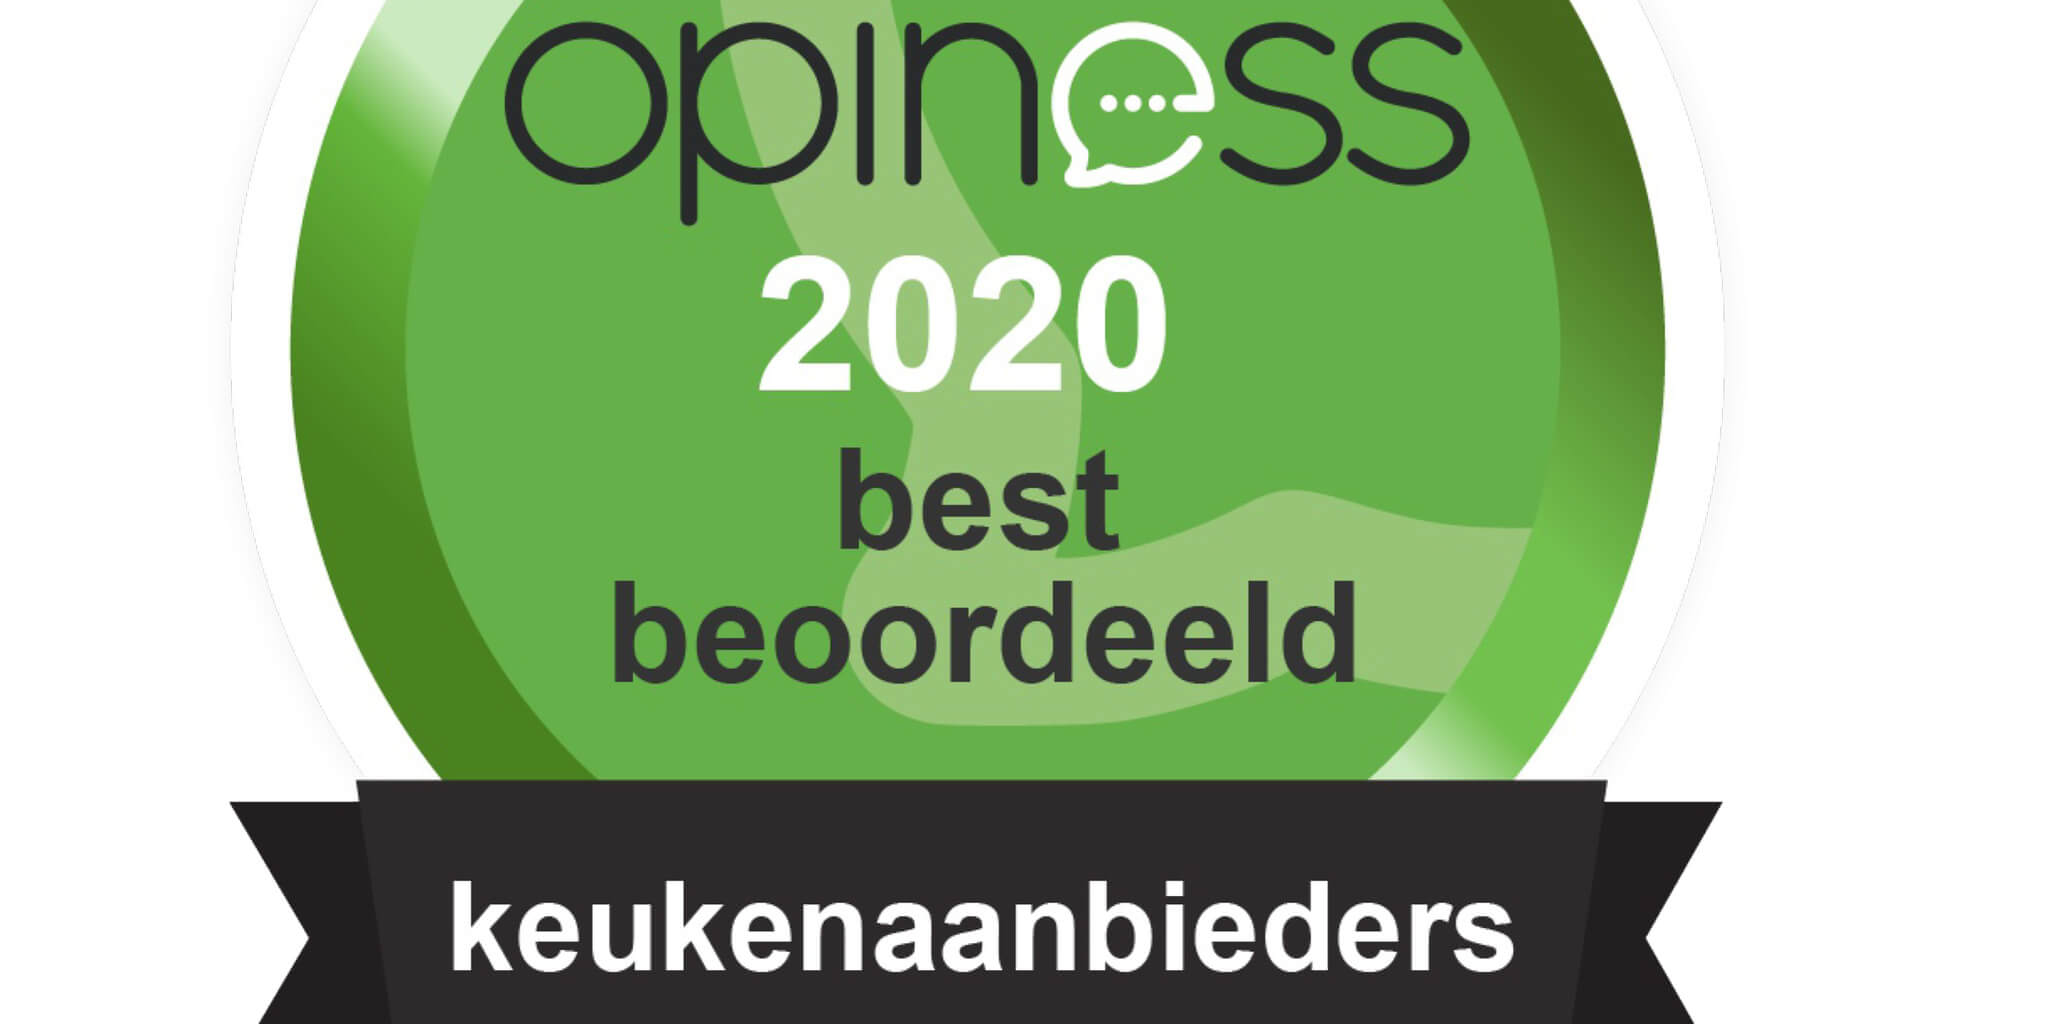 Tieleman Keukens wint titel ‘Best Beoordeeld 2020’ in de rubriek keukenaanbieders (Opiness.nl)